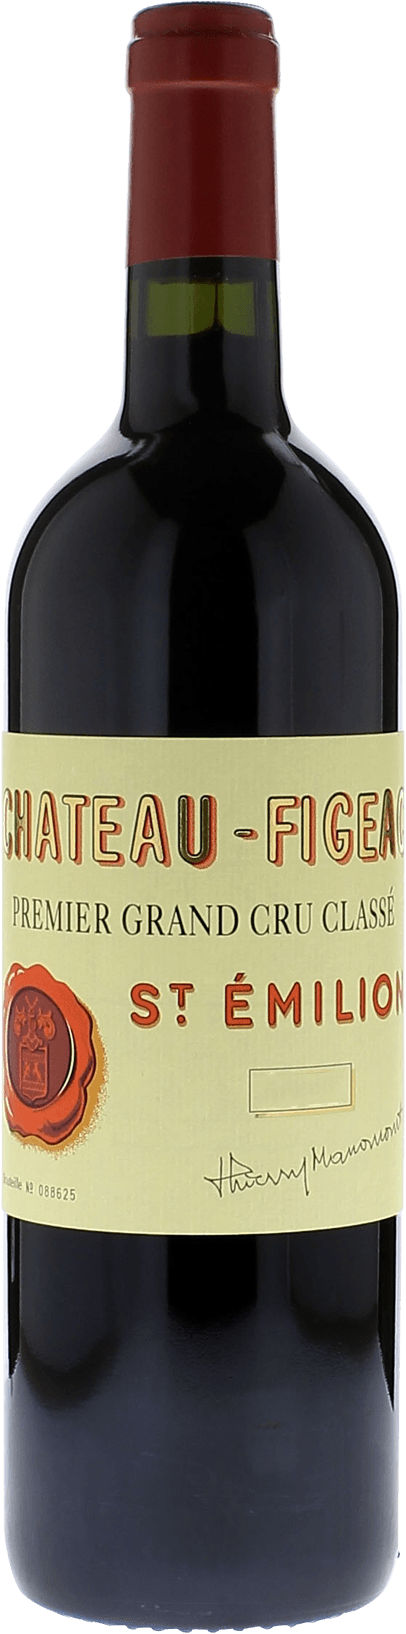 Figeac 1979 1er Grand cru B class Saint-Emilion, Bordeaux rouge